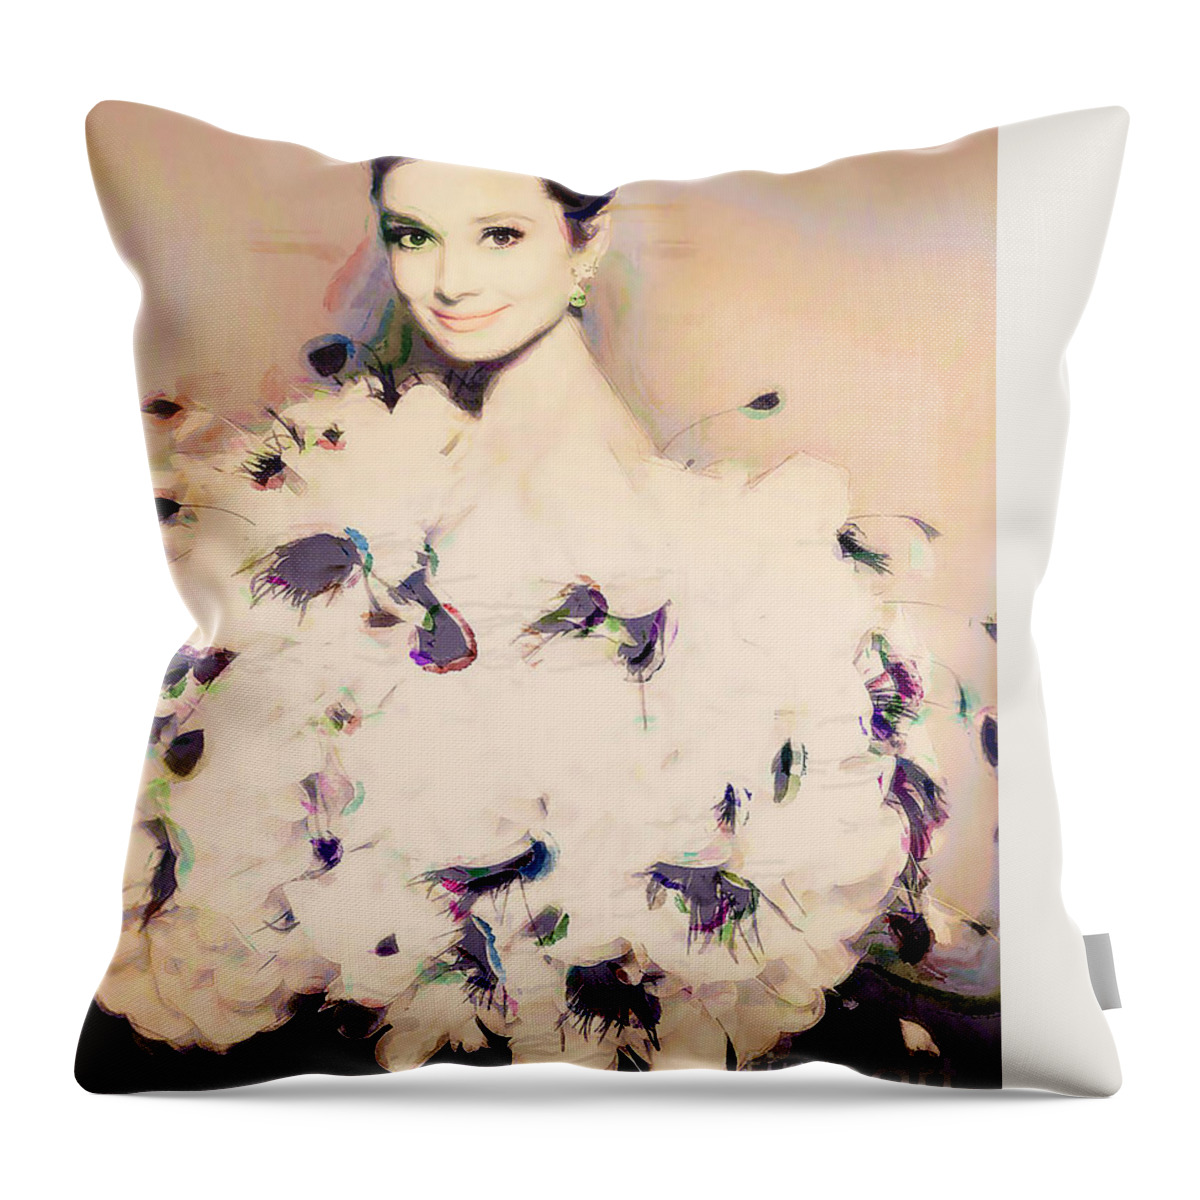 Audrey Hepburn Throw Pillow featuring the digital art Audrey Hepburn #3 by Jerzy Czyz